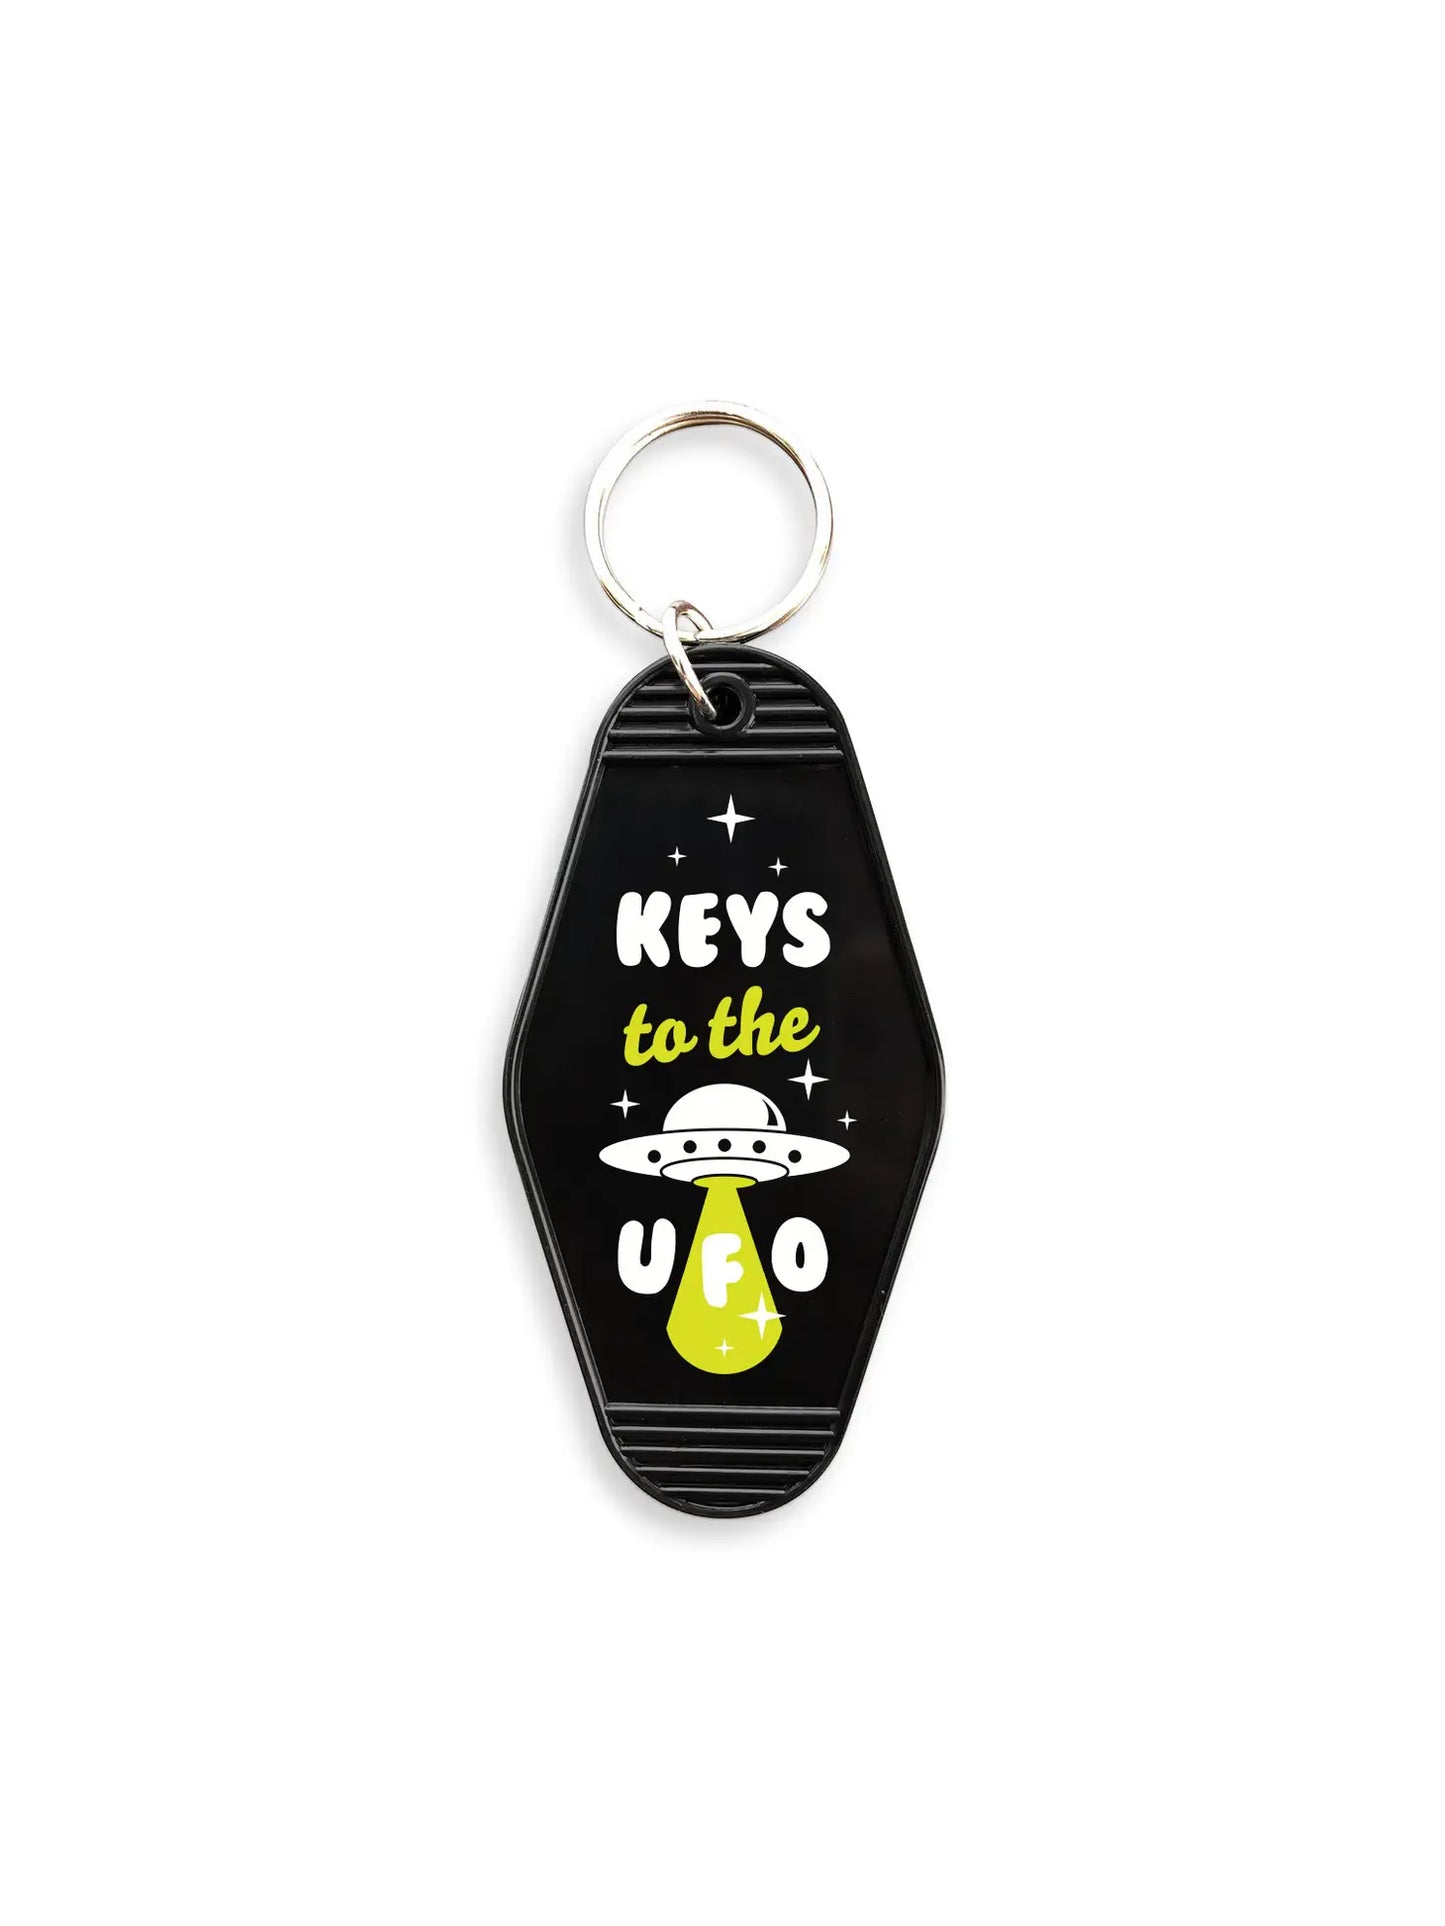 Keys To the Ufo Motel Keychain